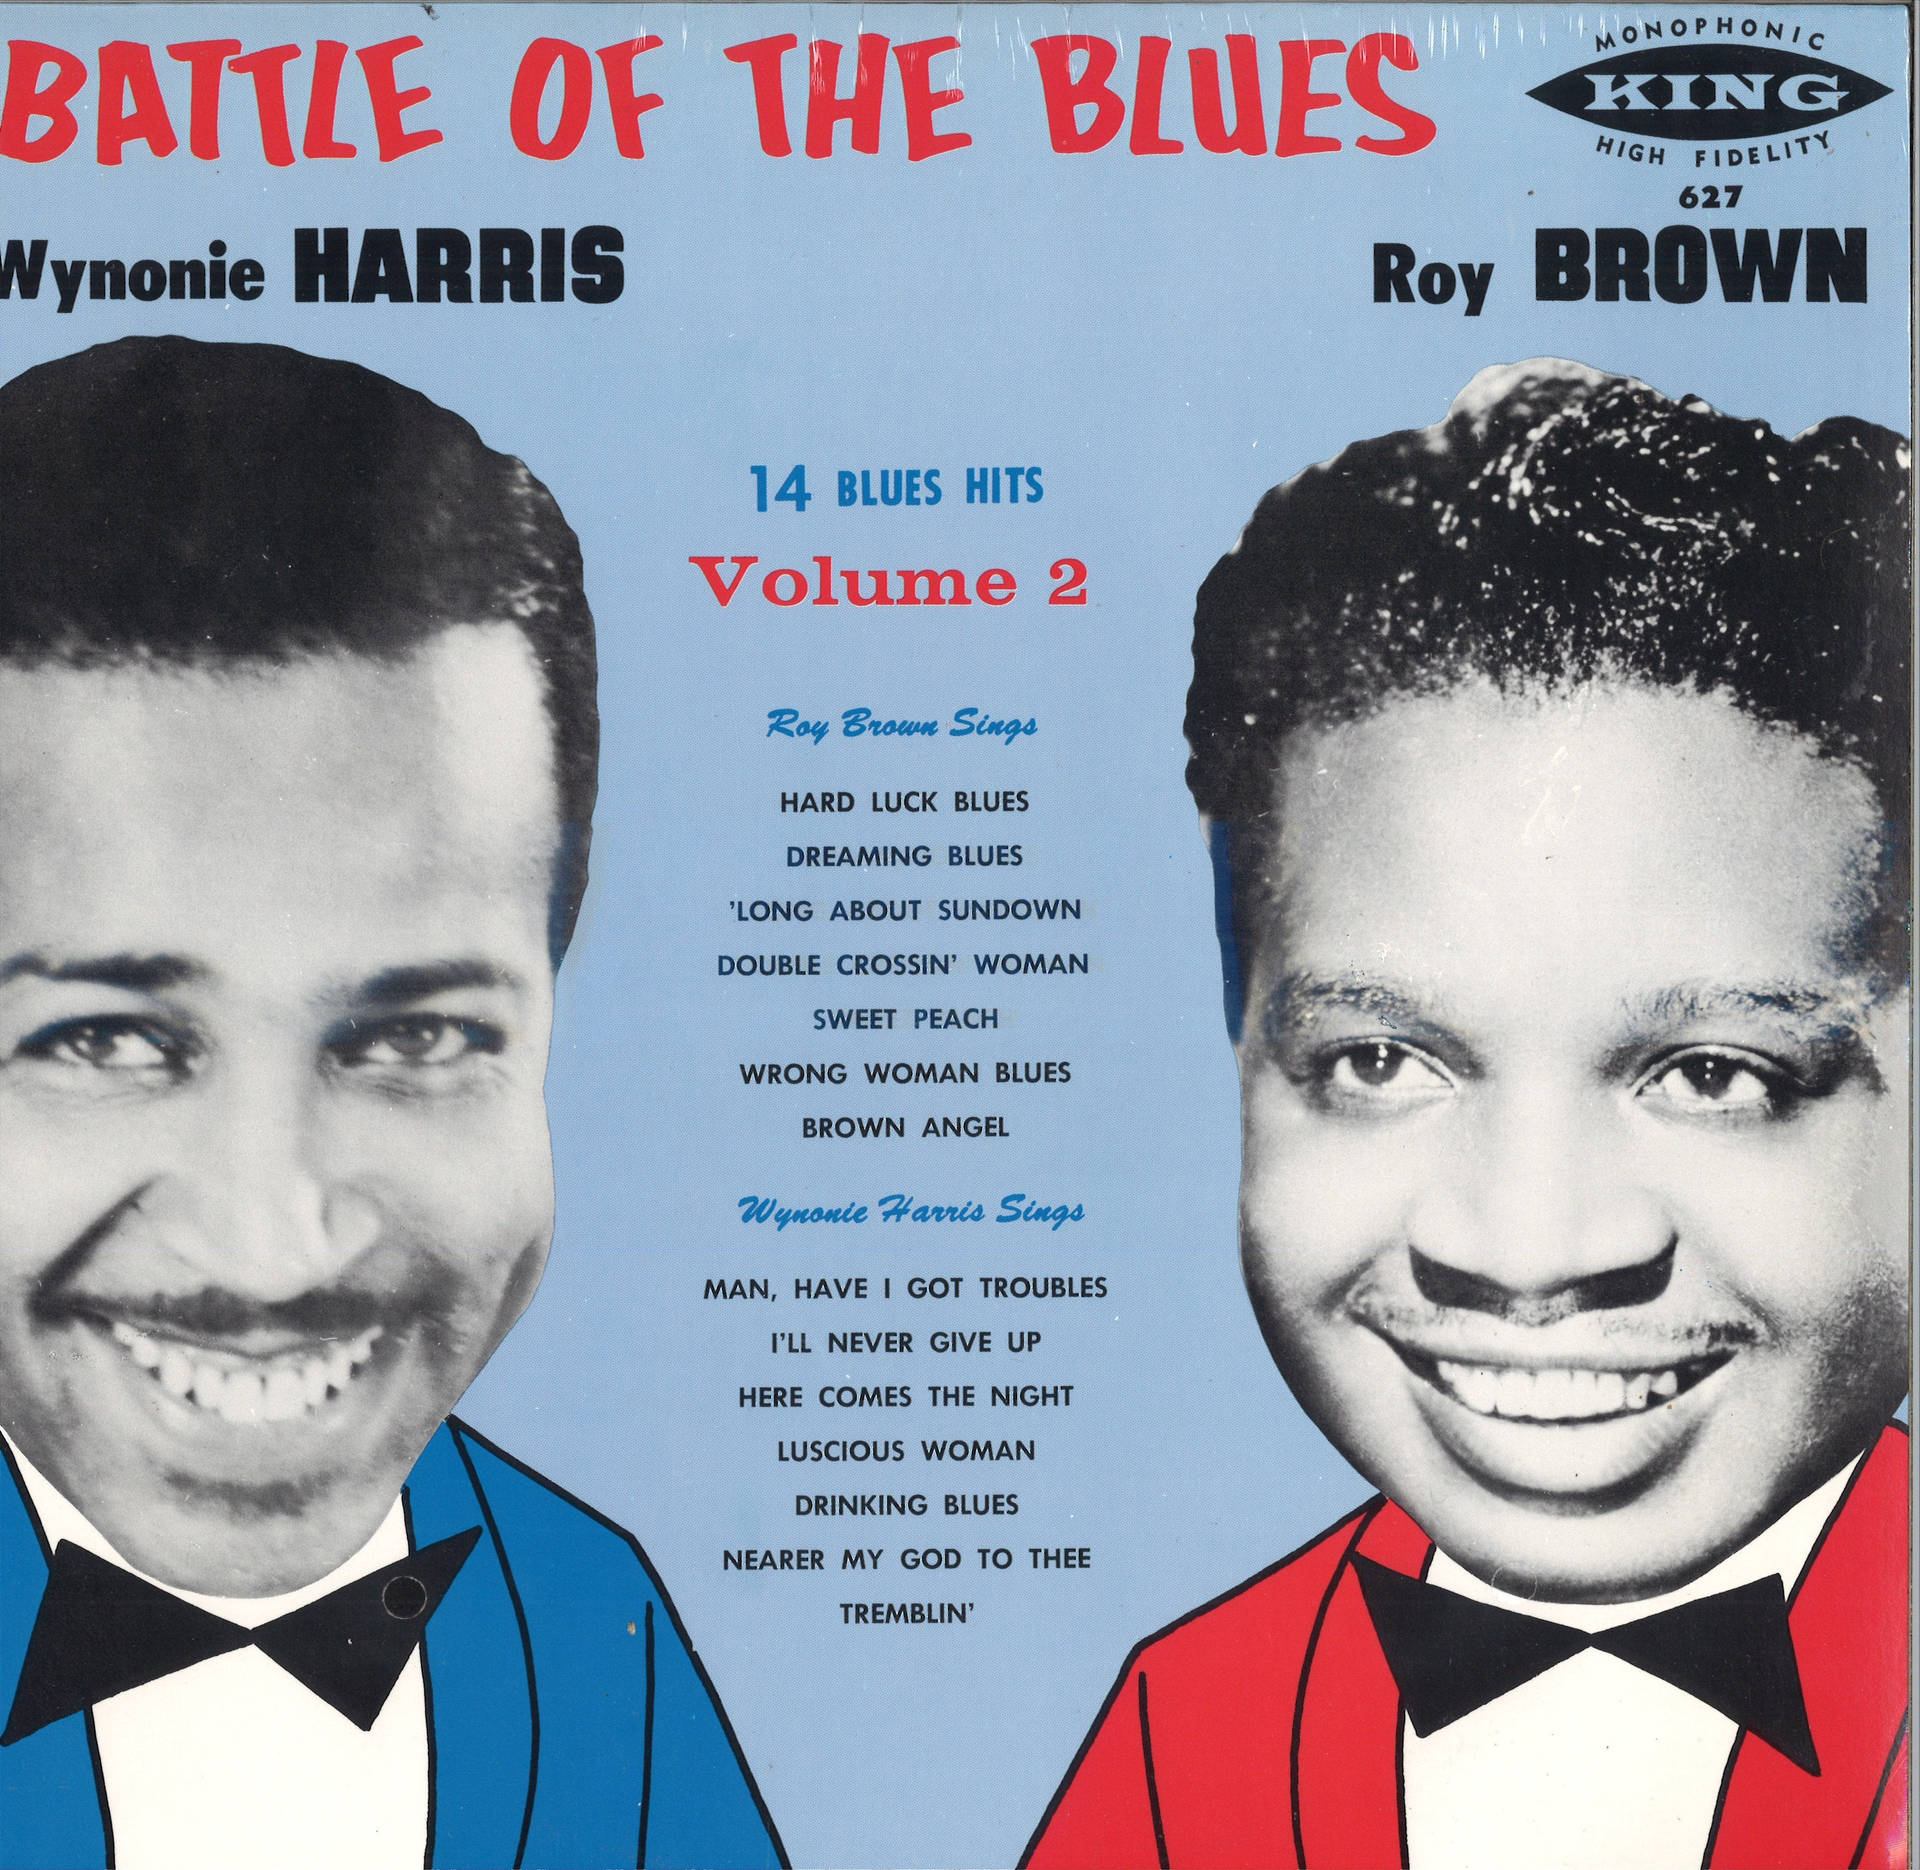 Wynonieharris Und Roy Brown - Battle Of The Blues Cover Wallpaper